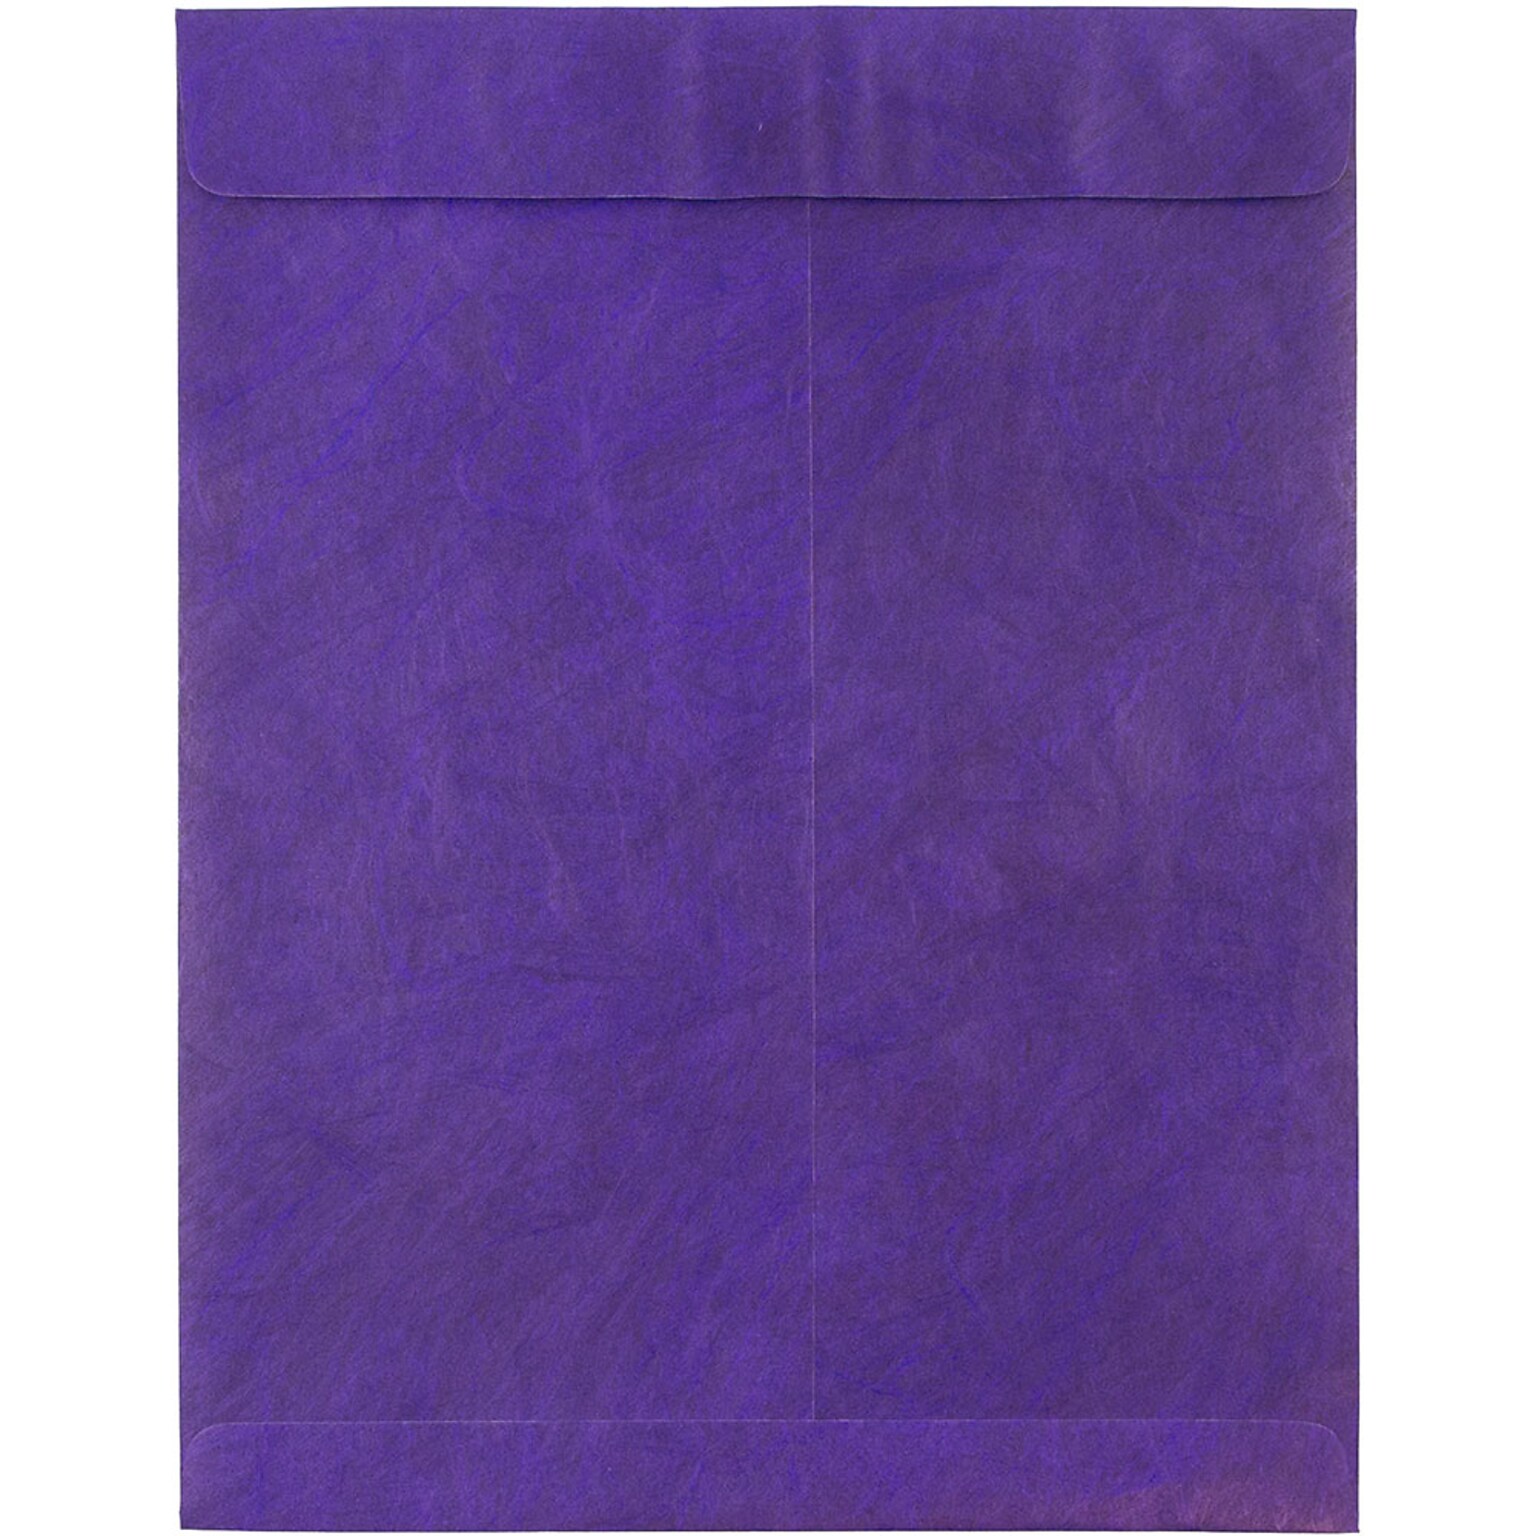 JAM Paper 10 x 13 Tear-Proof Open End Catalog Envelopes, Purple, 25/Pack (V021382)